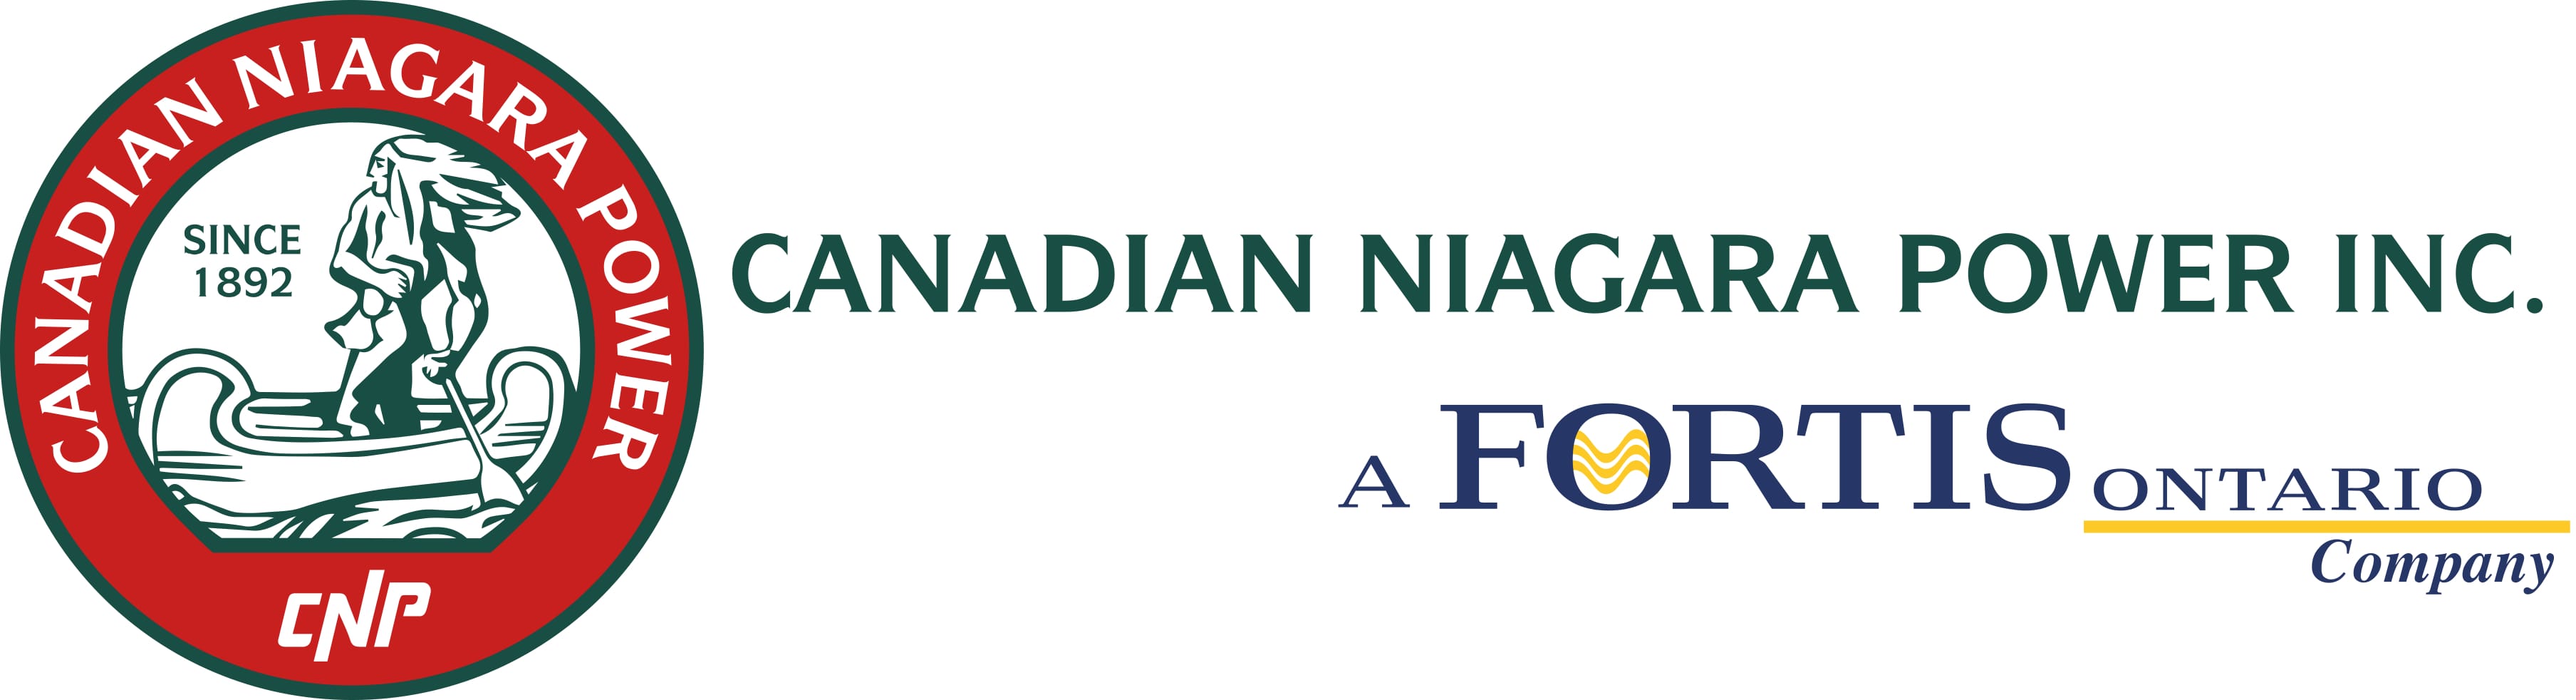 Canadian Niagara Power Logo